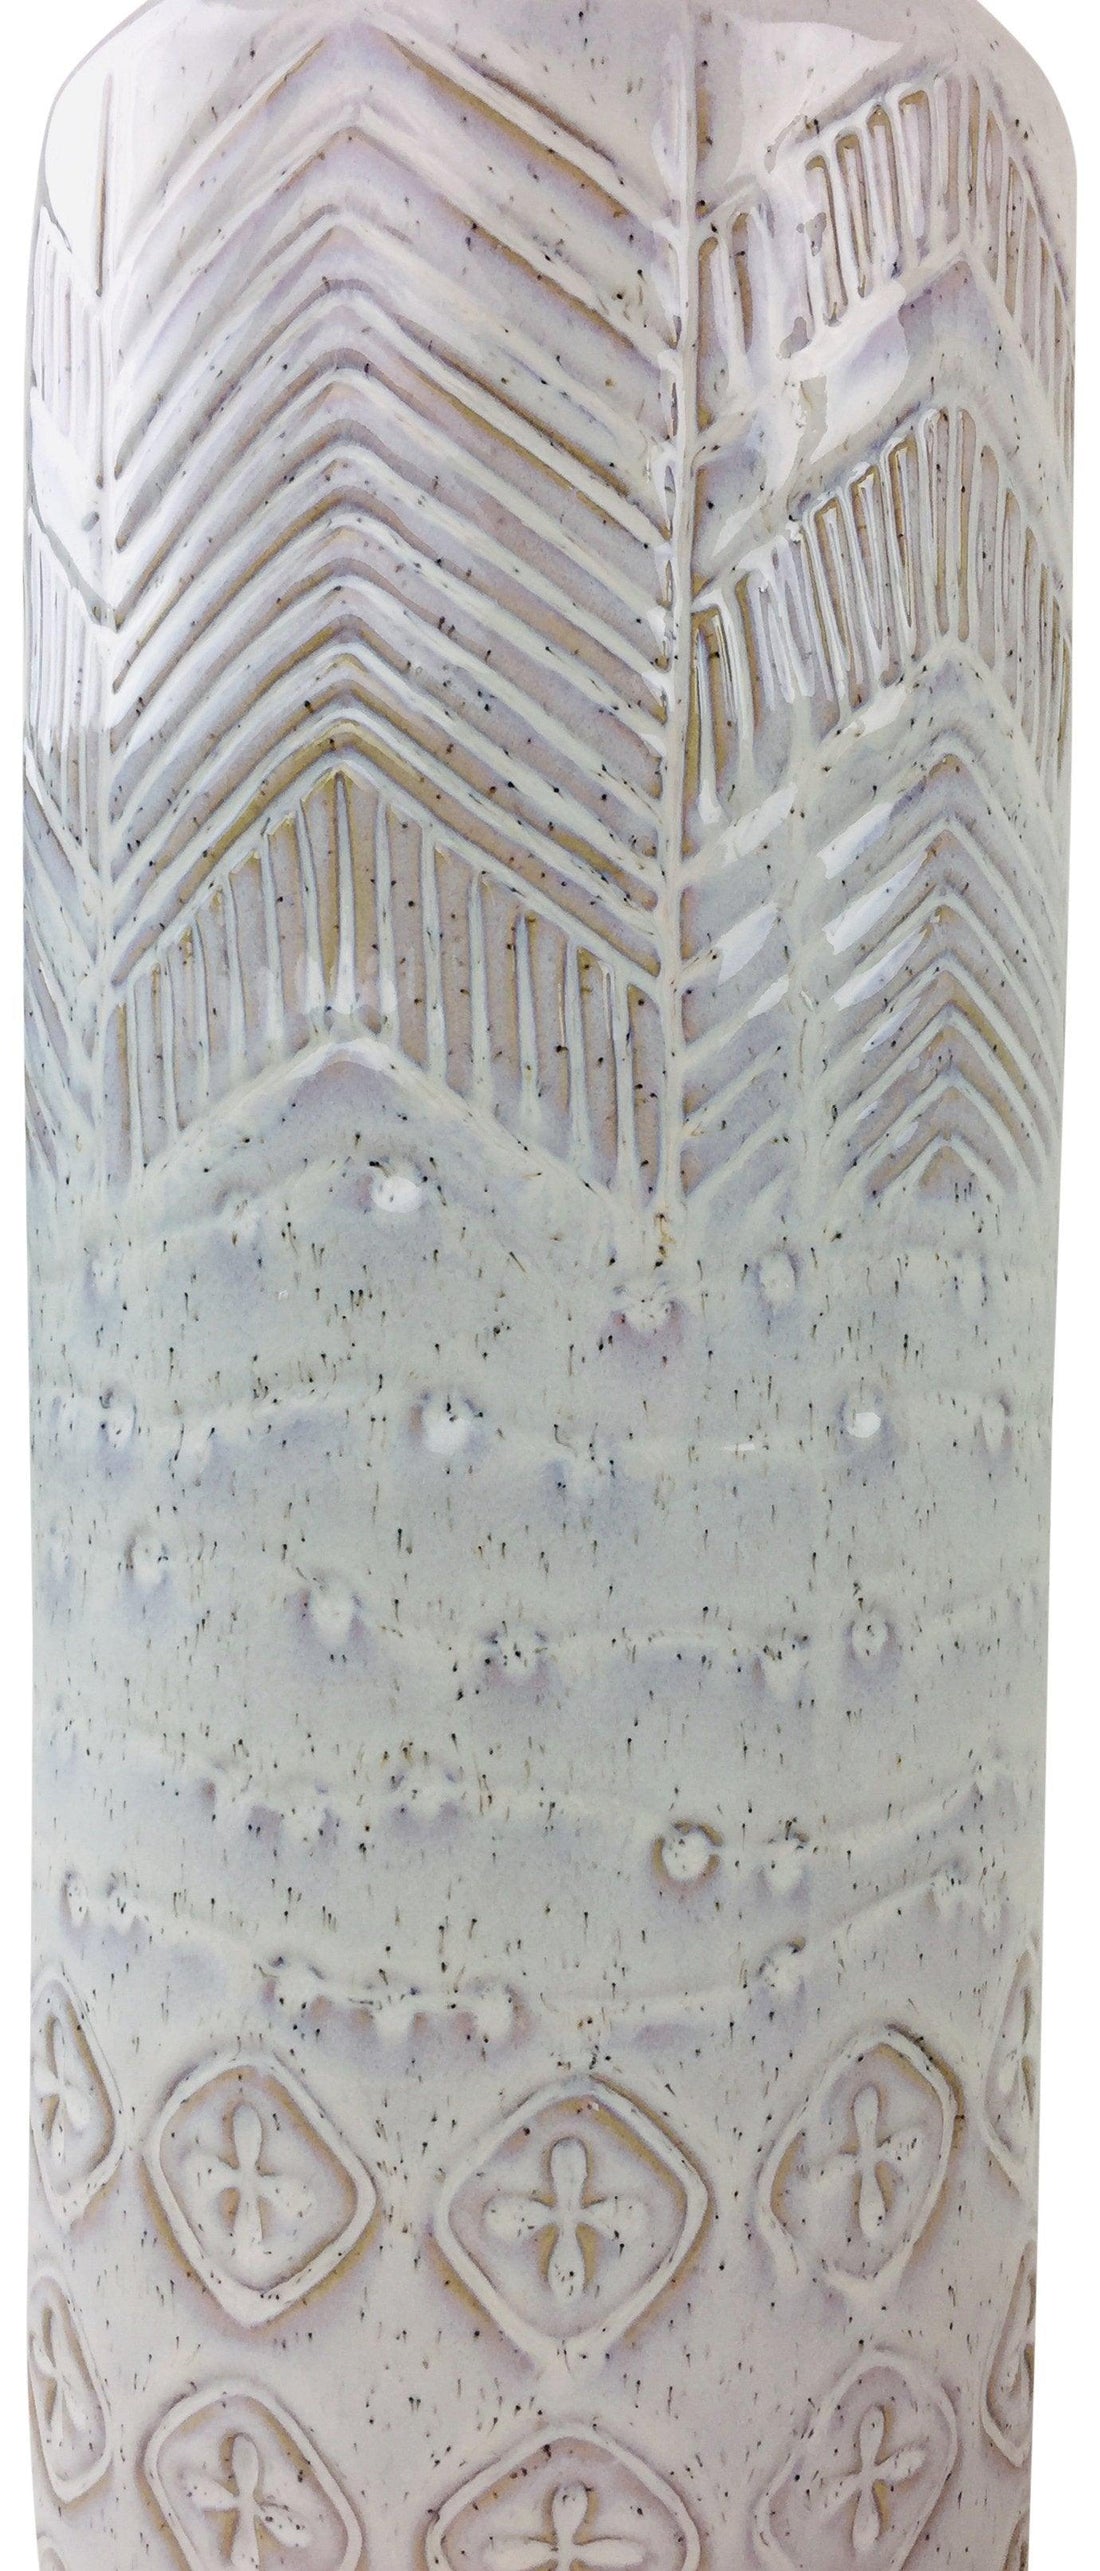 White Herringbone Textured Stoneware Vase 44cm - £65.99 - Planters, Vases & Plant Stands 